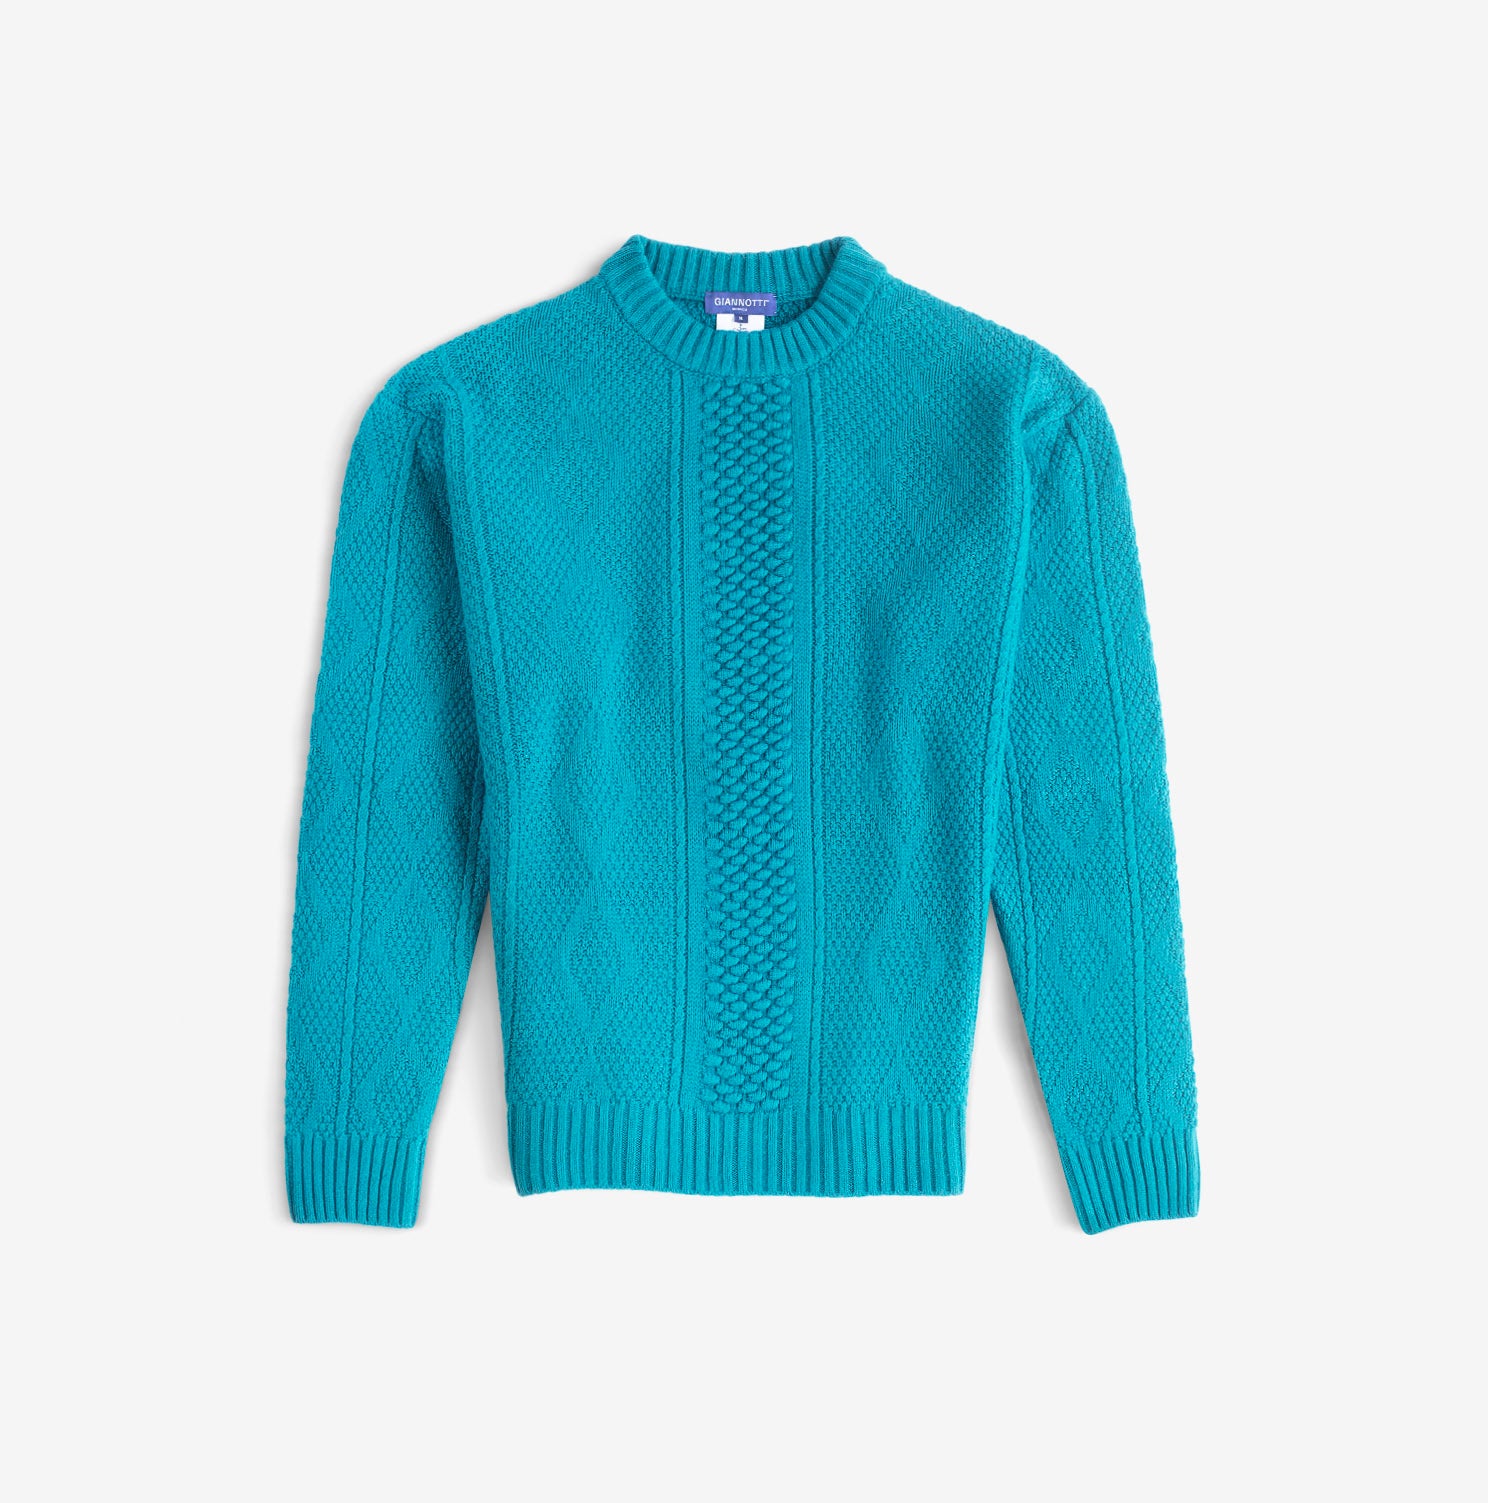 The Soft Weekender Aran Sweater